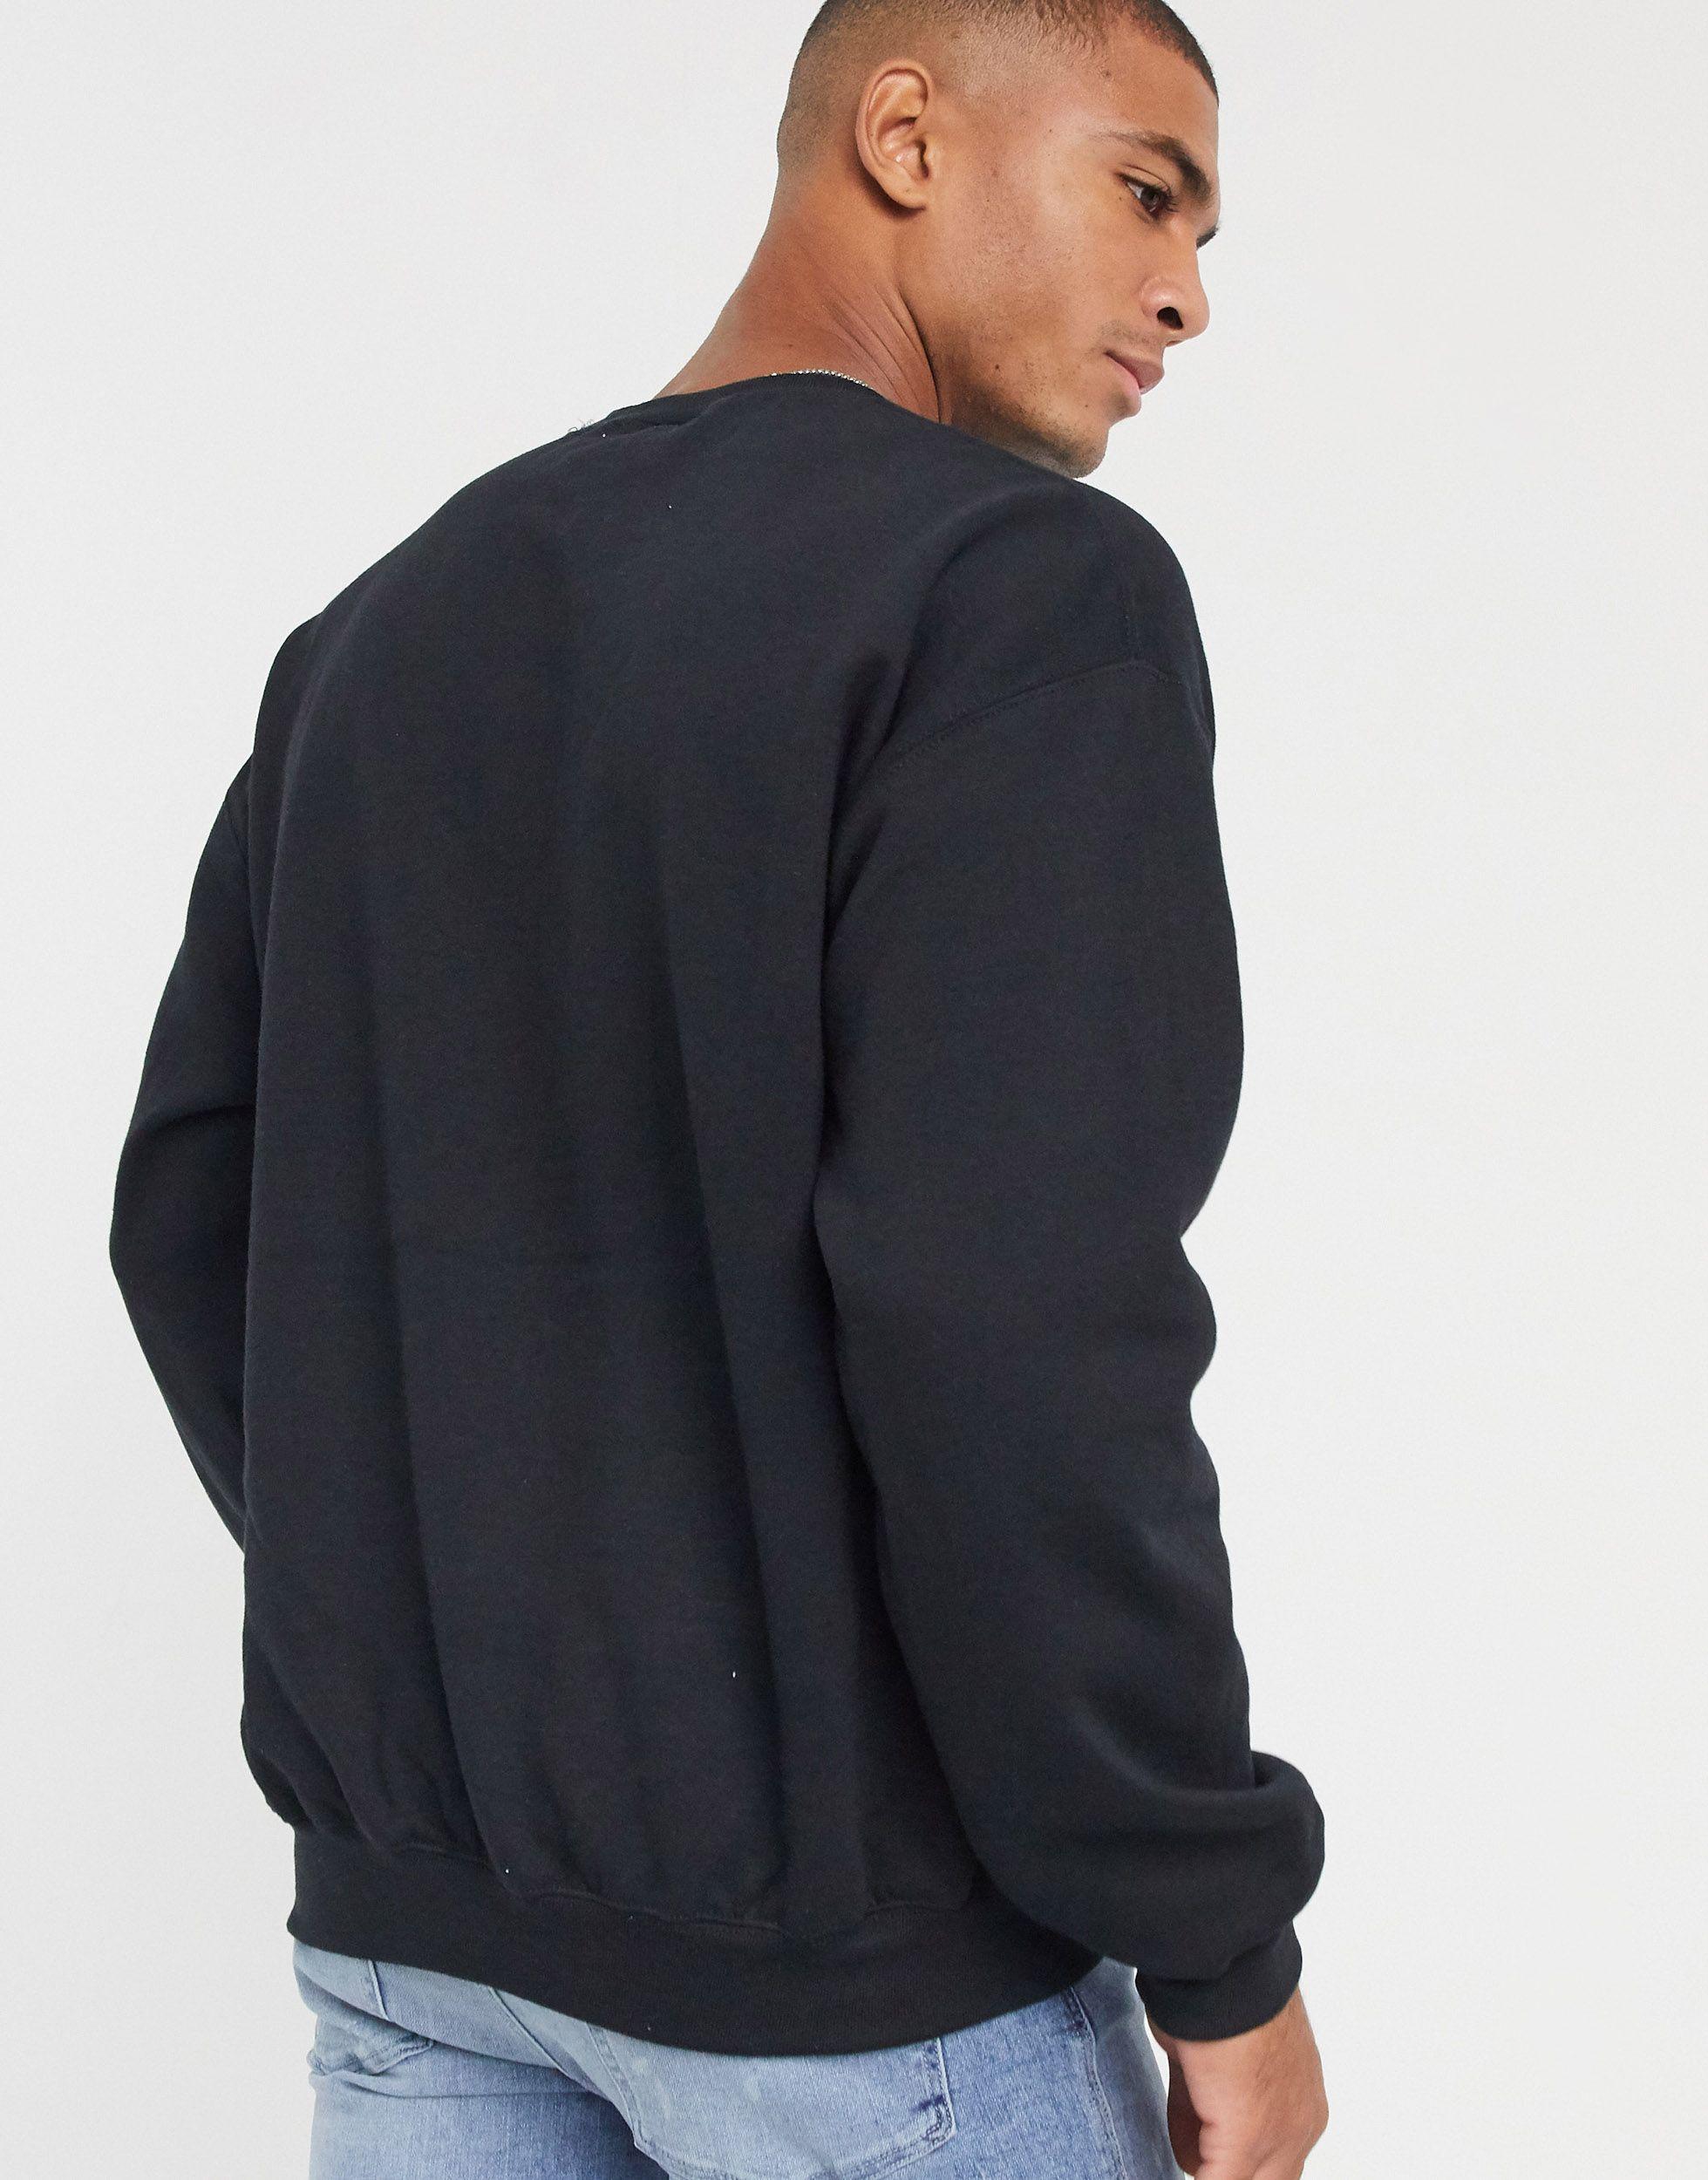 TOPMAN Sweatshirt With Los Angeles Print in Black for Men - Lyst